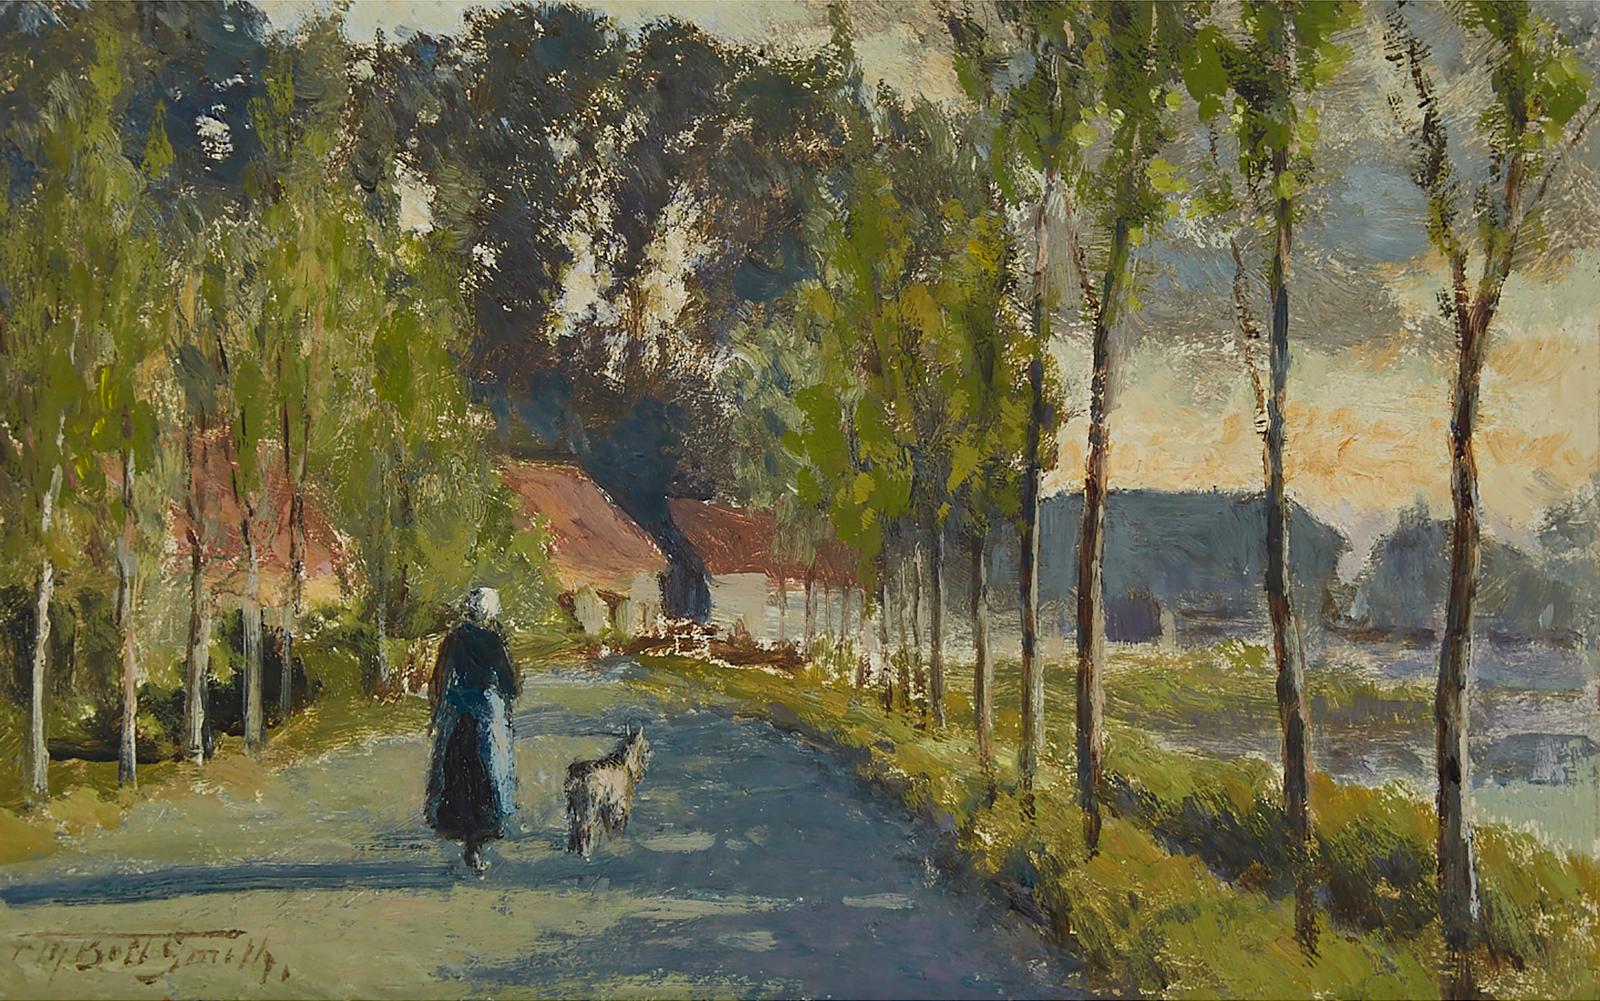 Frederic Martlett Bell-Smith (1846-1923) - A Dutch Village